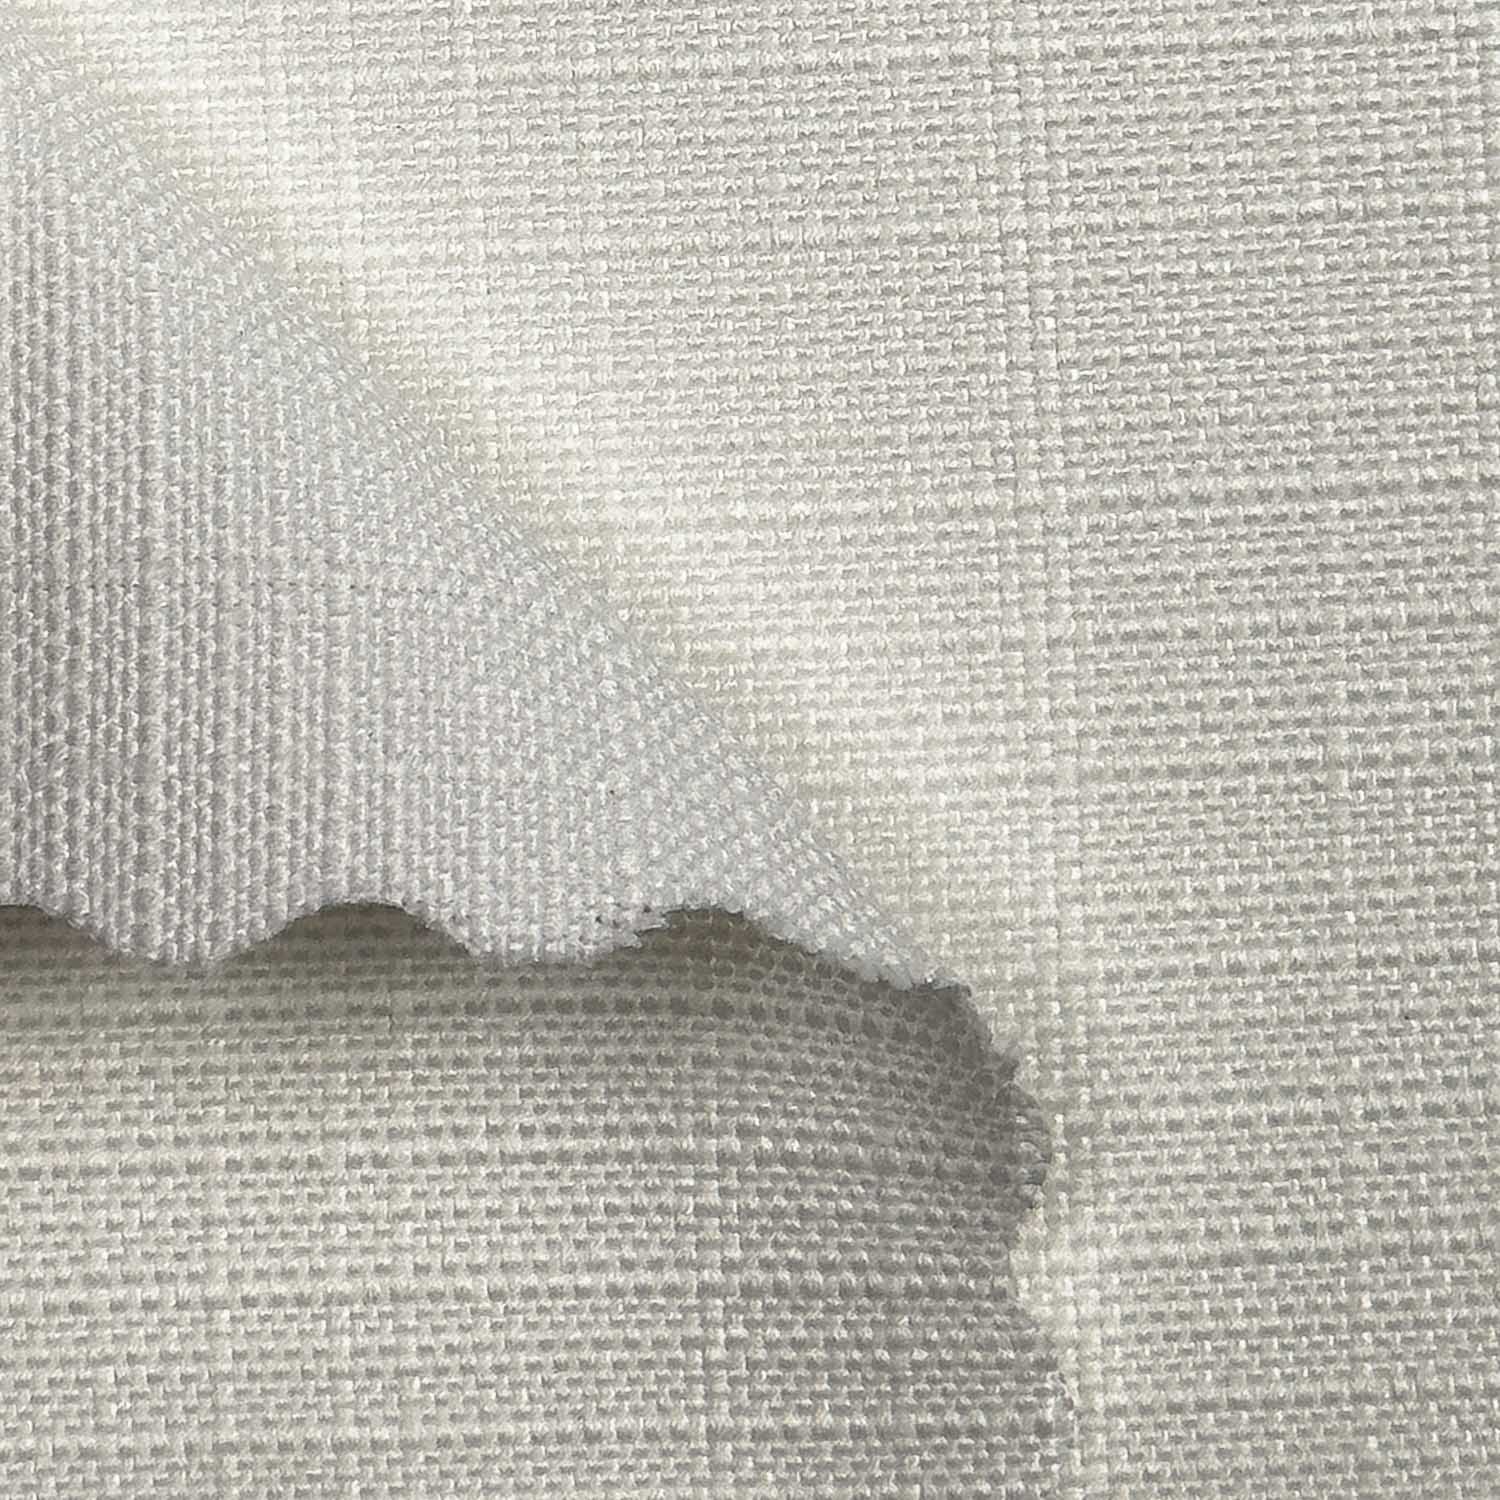 16 x 16 IFR Stretch Fabric Sample